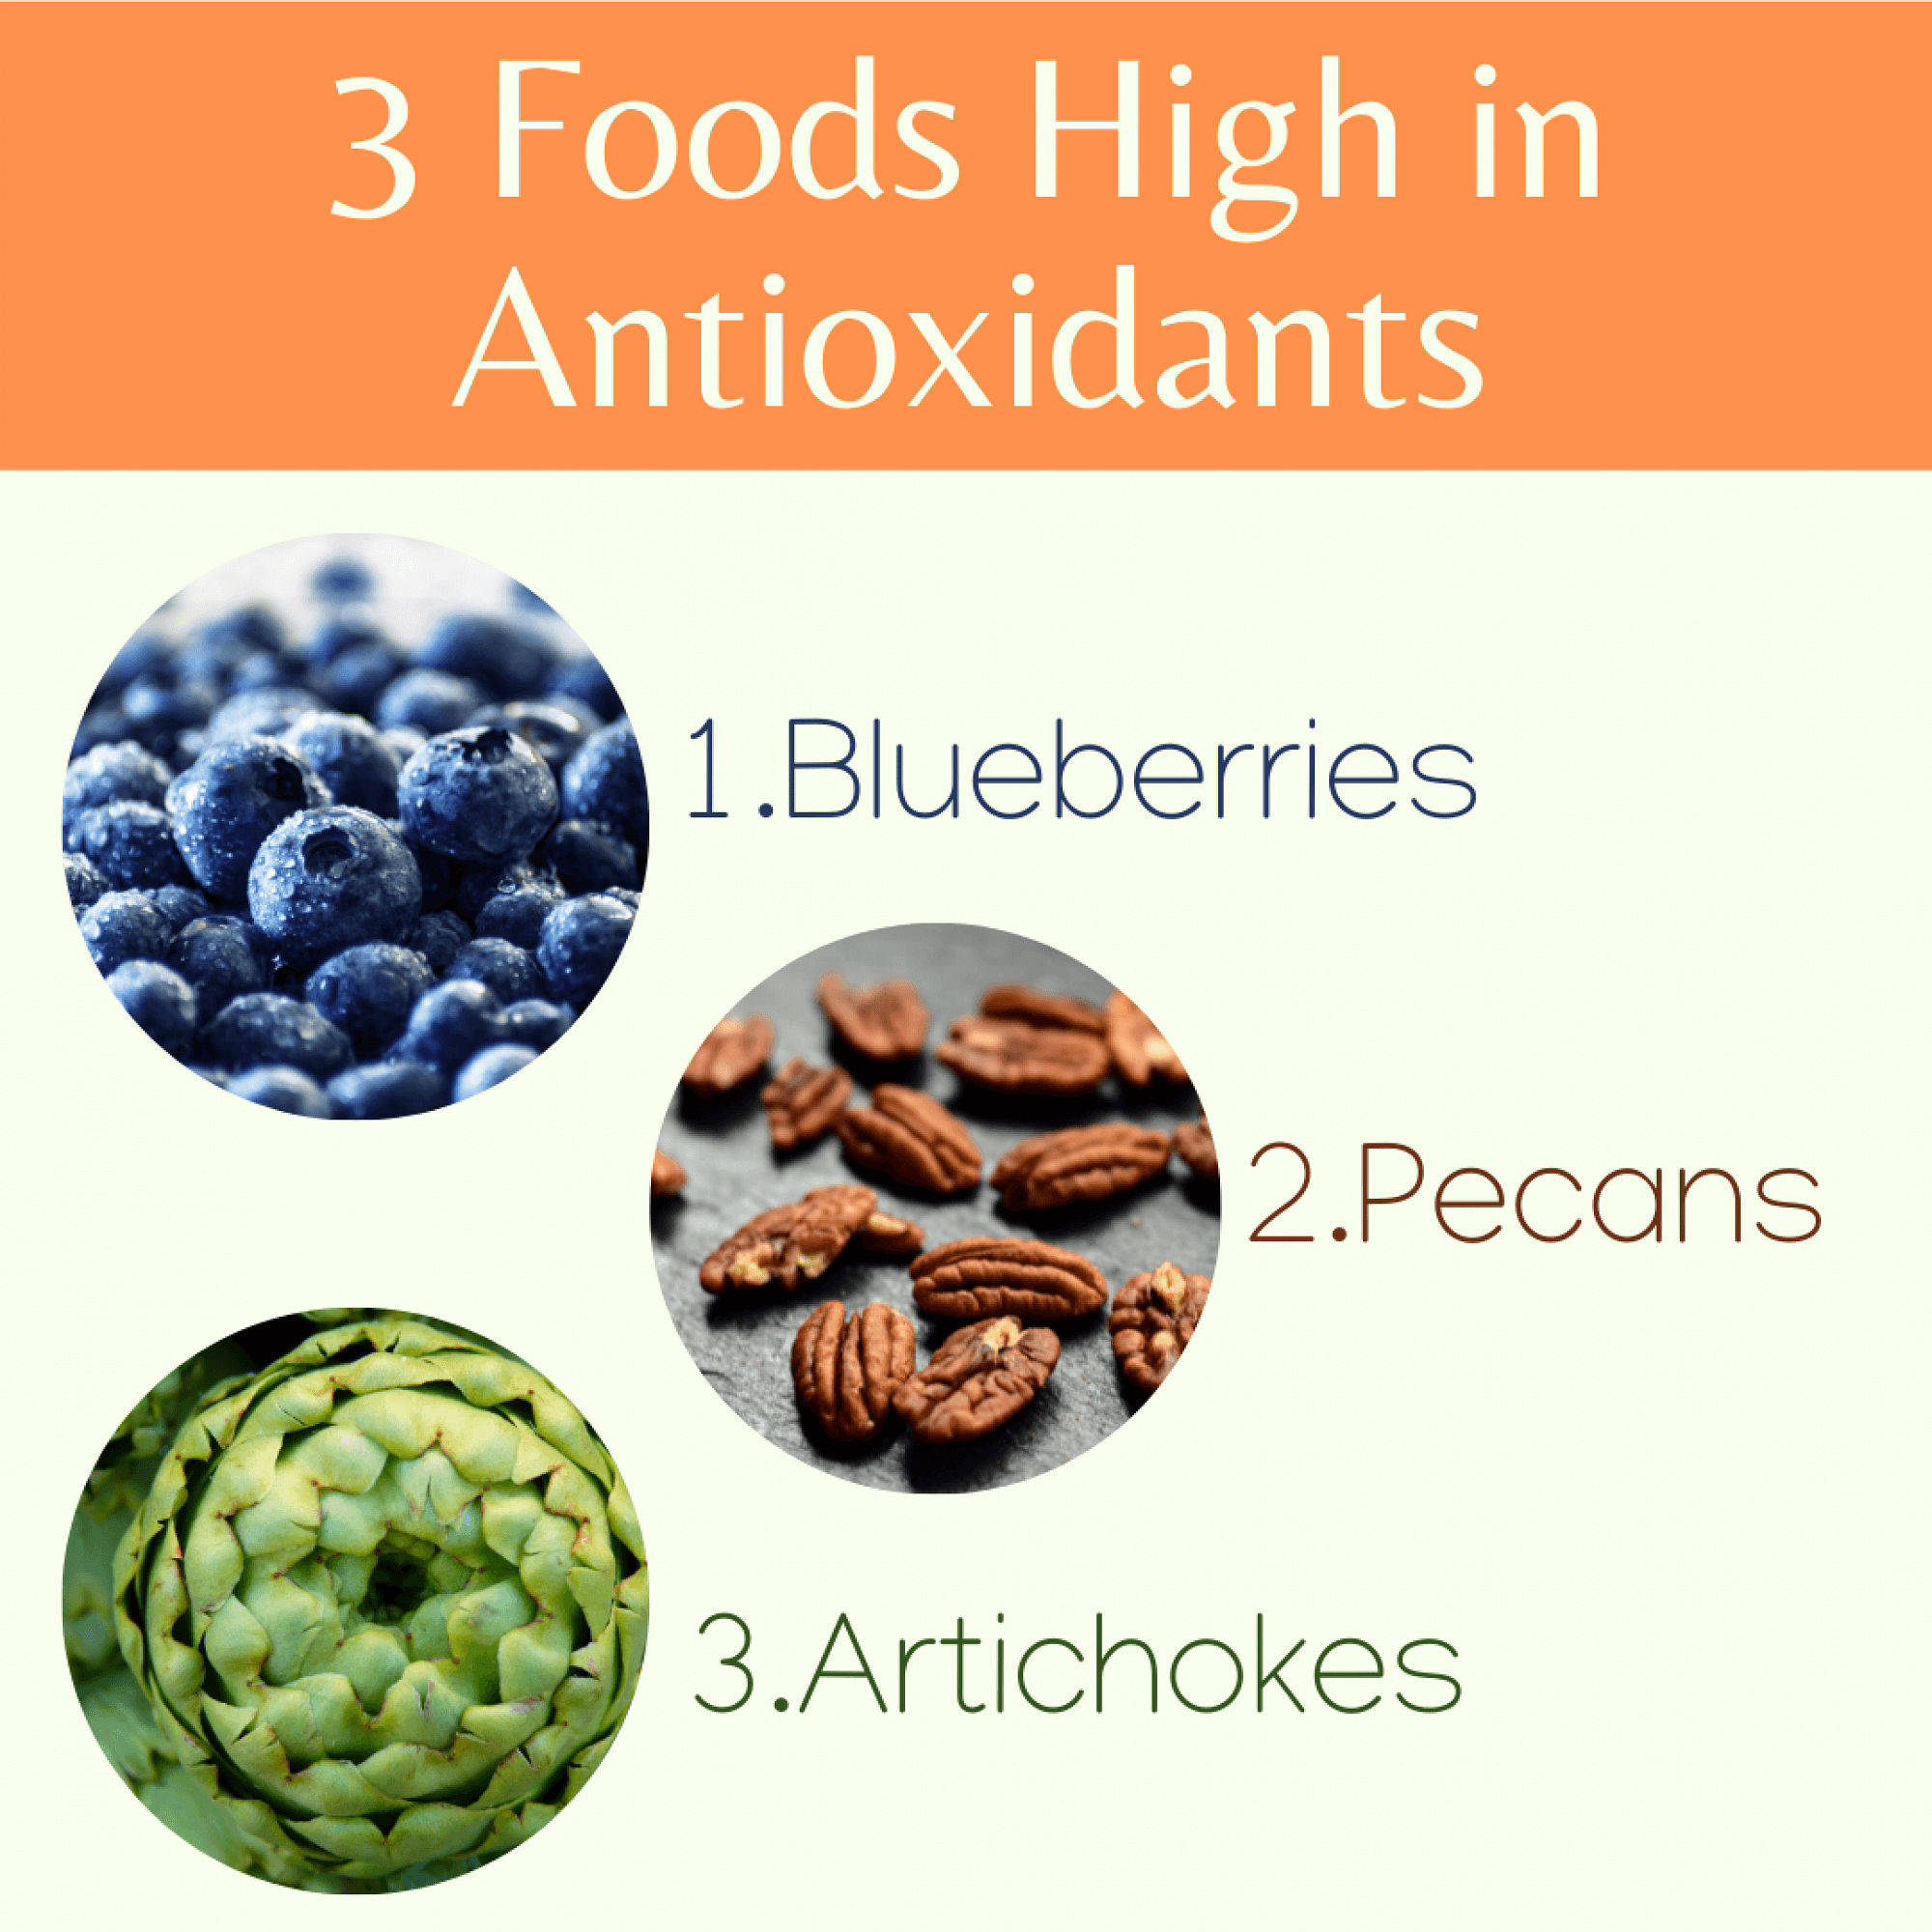 3 Foods High in Antioxidants: blueberries, pecans, artichokes.